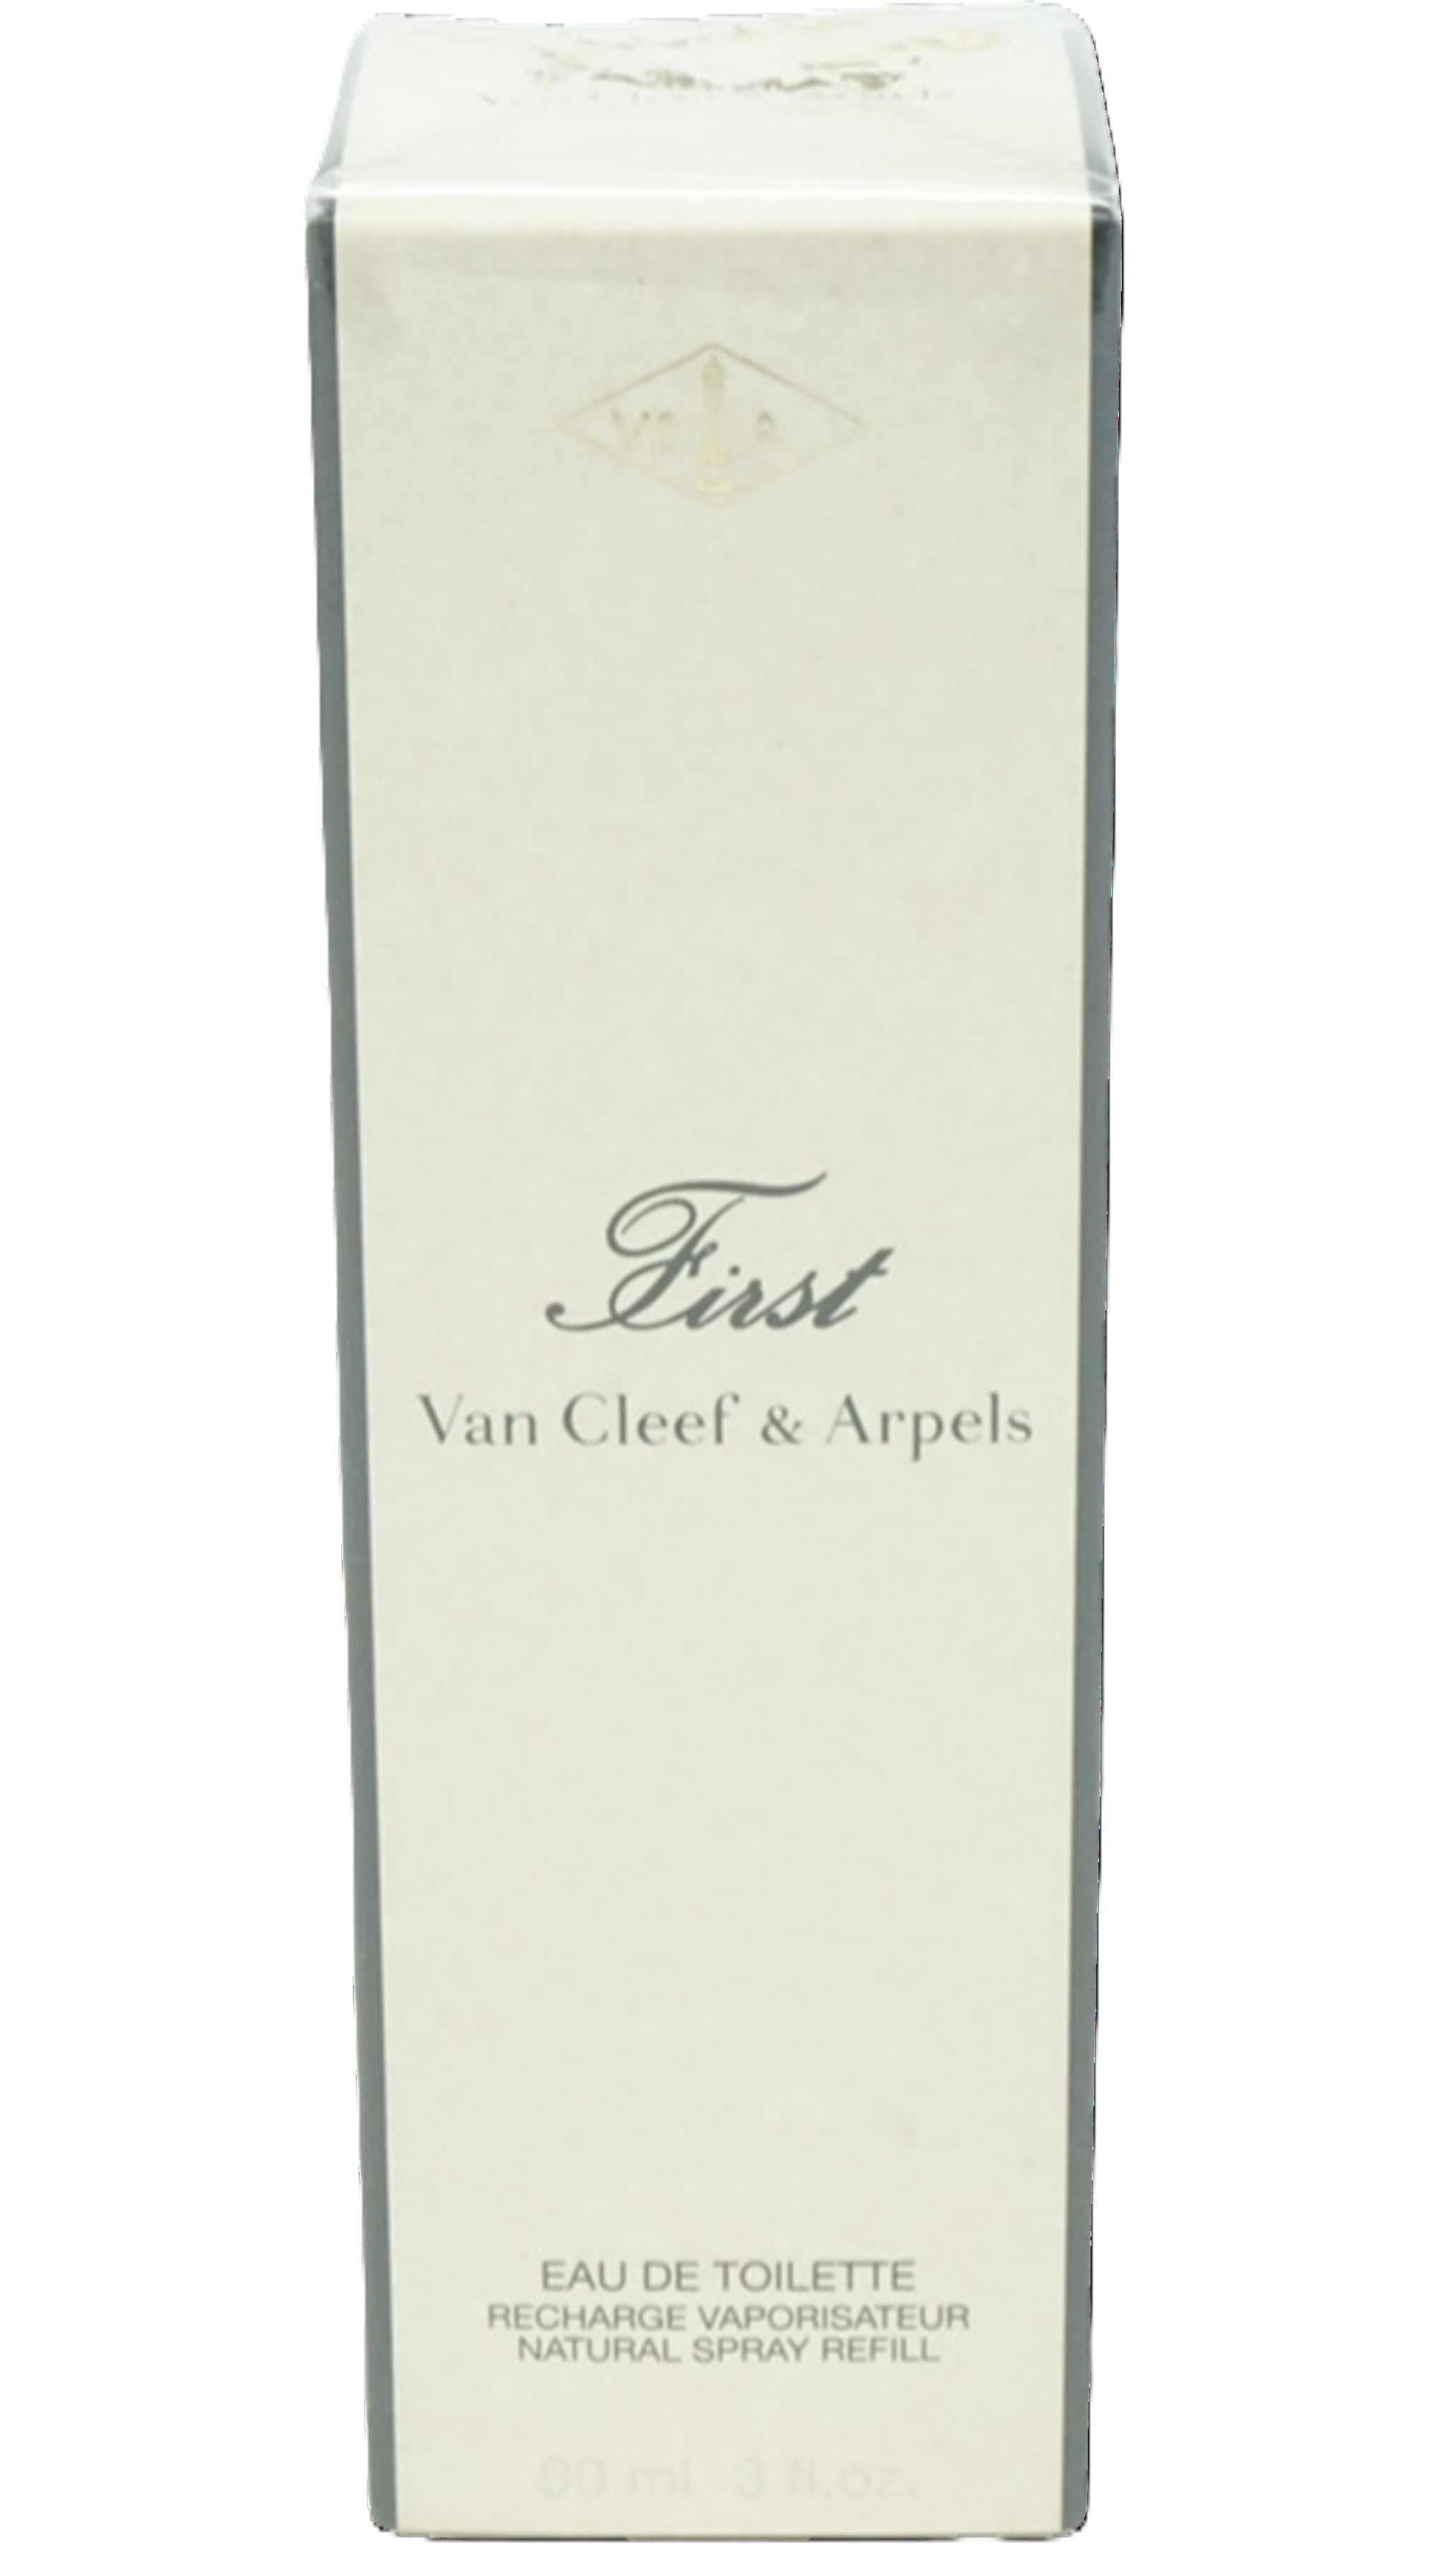 Van Cleef & Arpels Eau de Toilette Van Cleef & Arpels First Eau de Toilette Refill Spray 90 ml